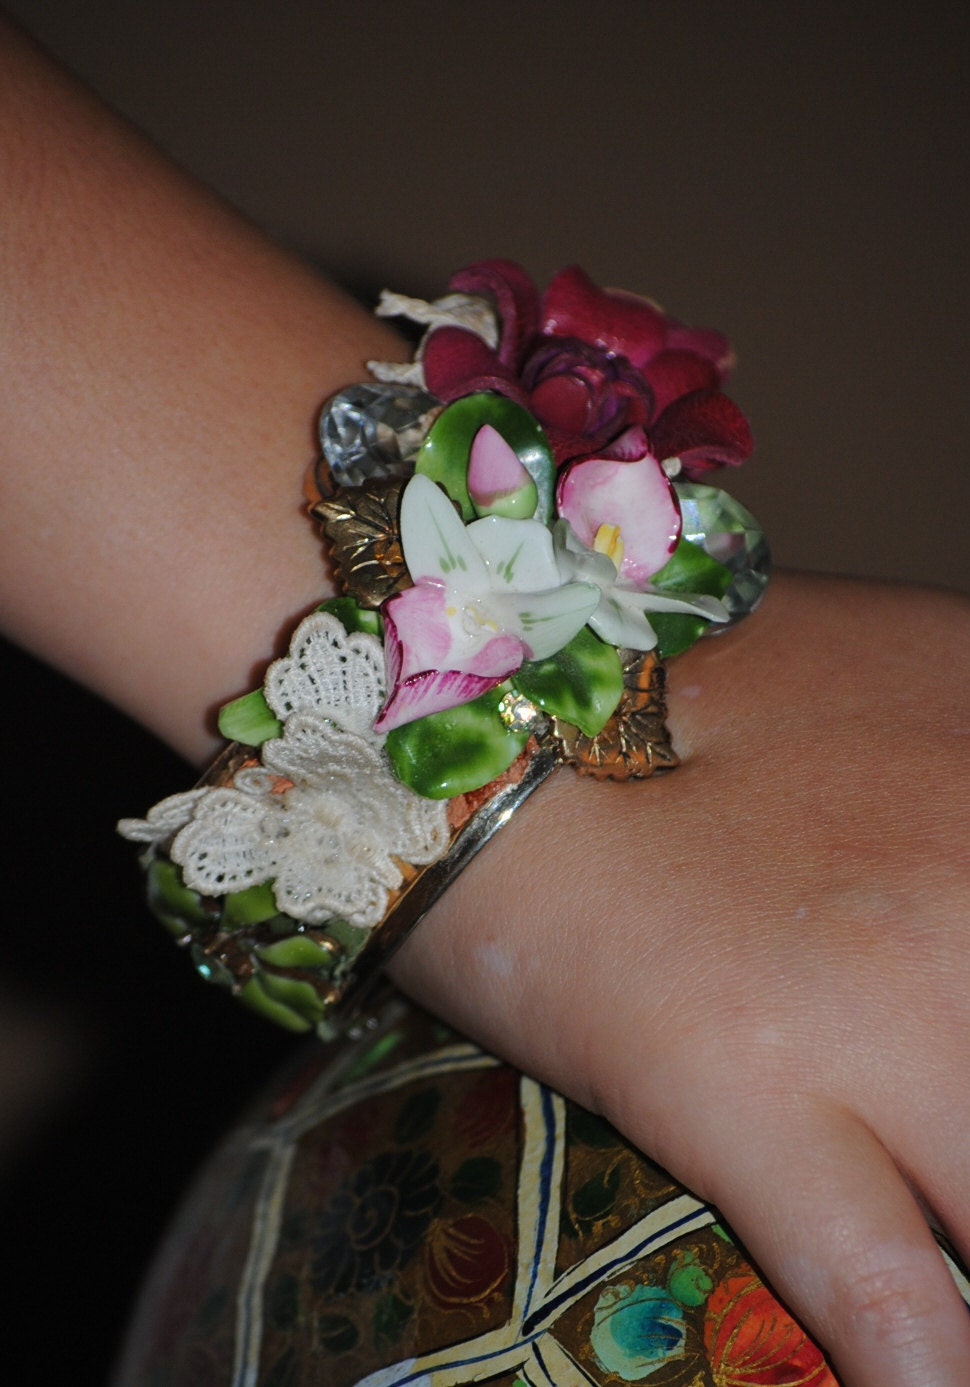 Victorian style assemblage cuff bracelet bangle OOAK